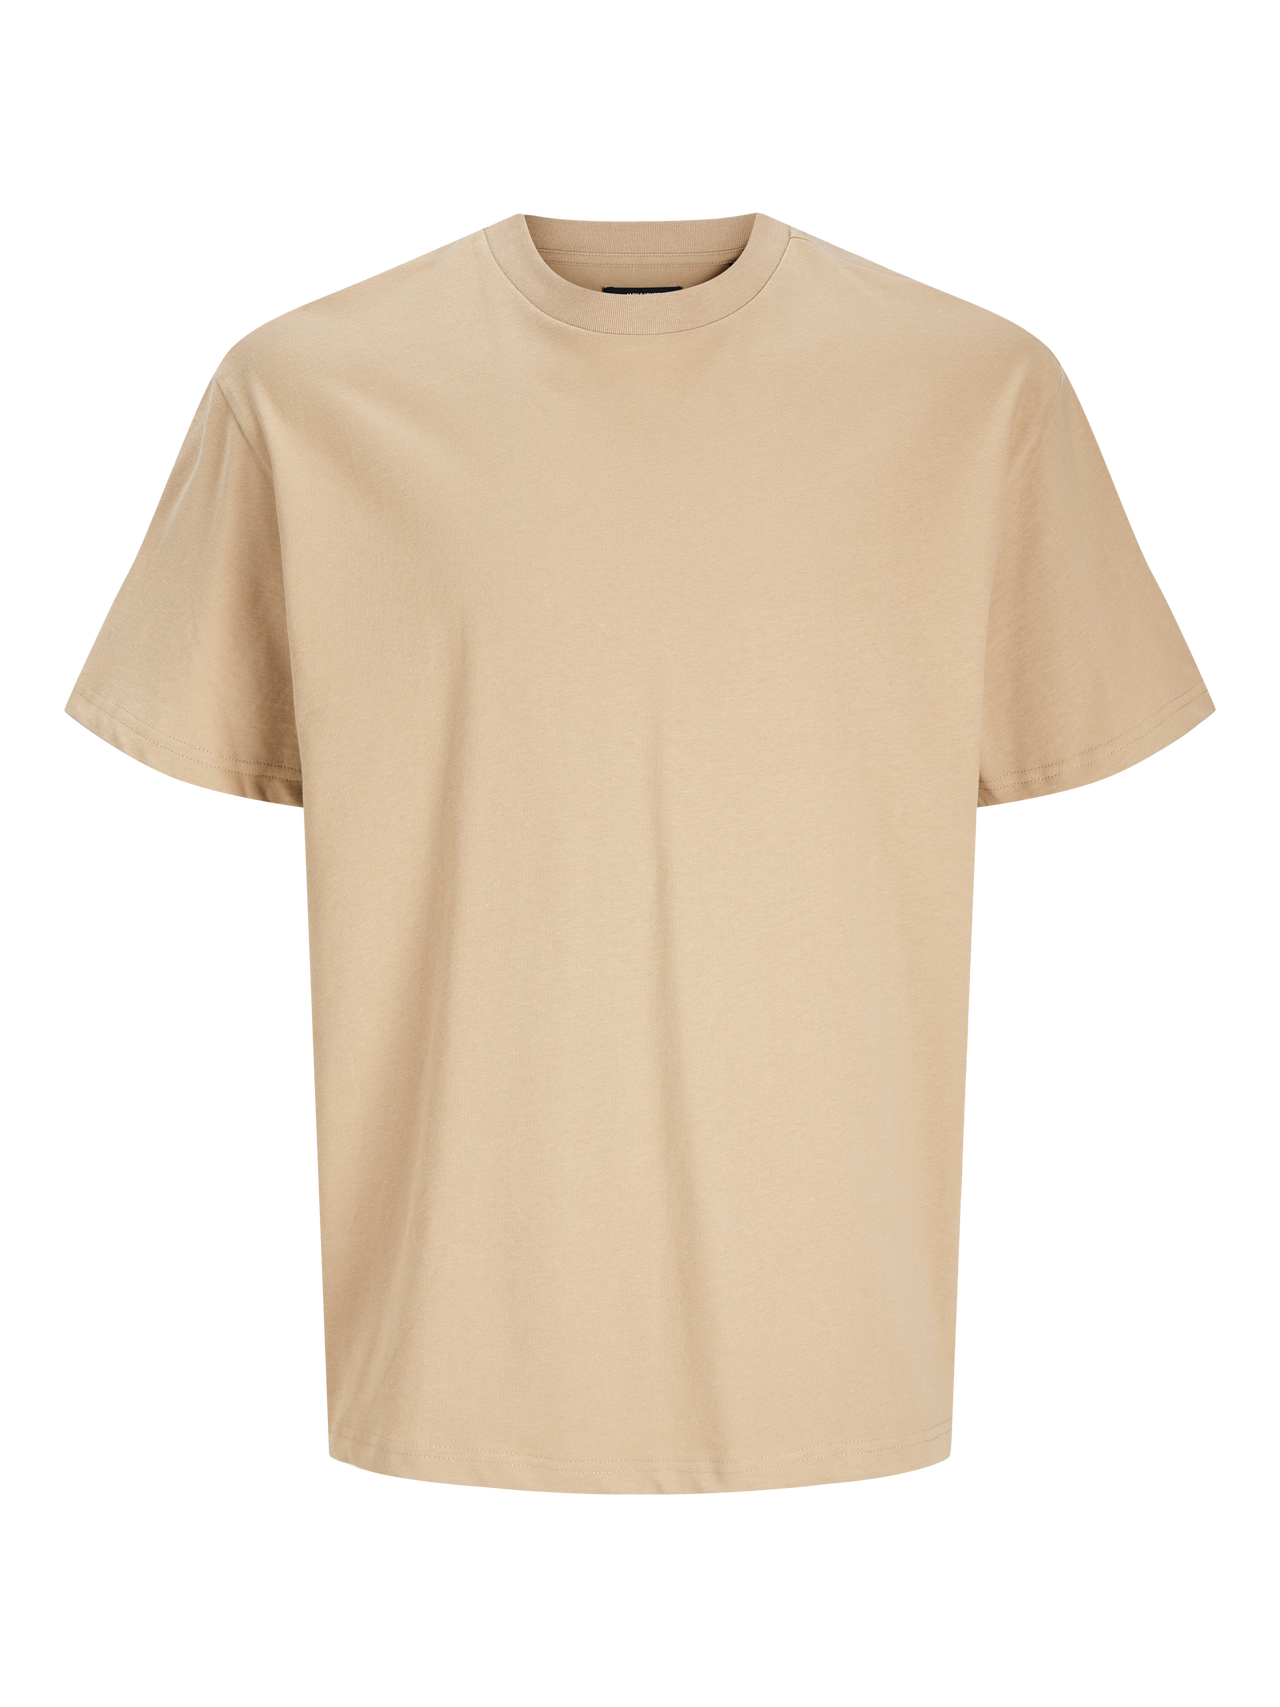 Jack & Jones Plain Crew neck T-shirt -Travertine - 12255176